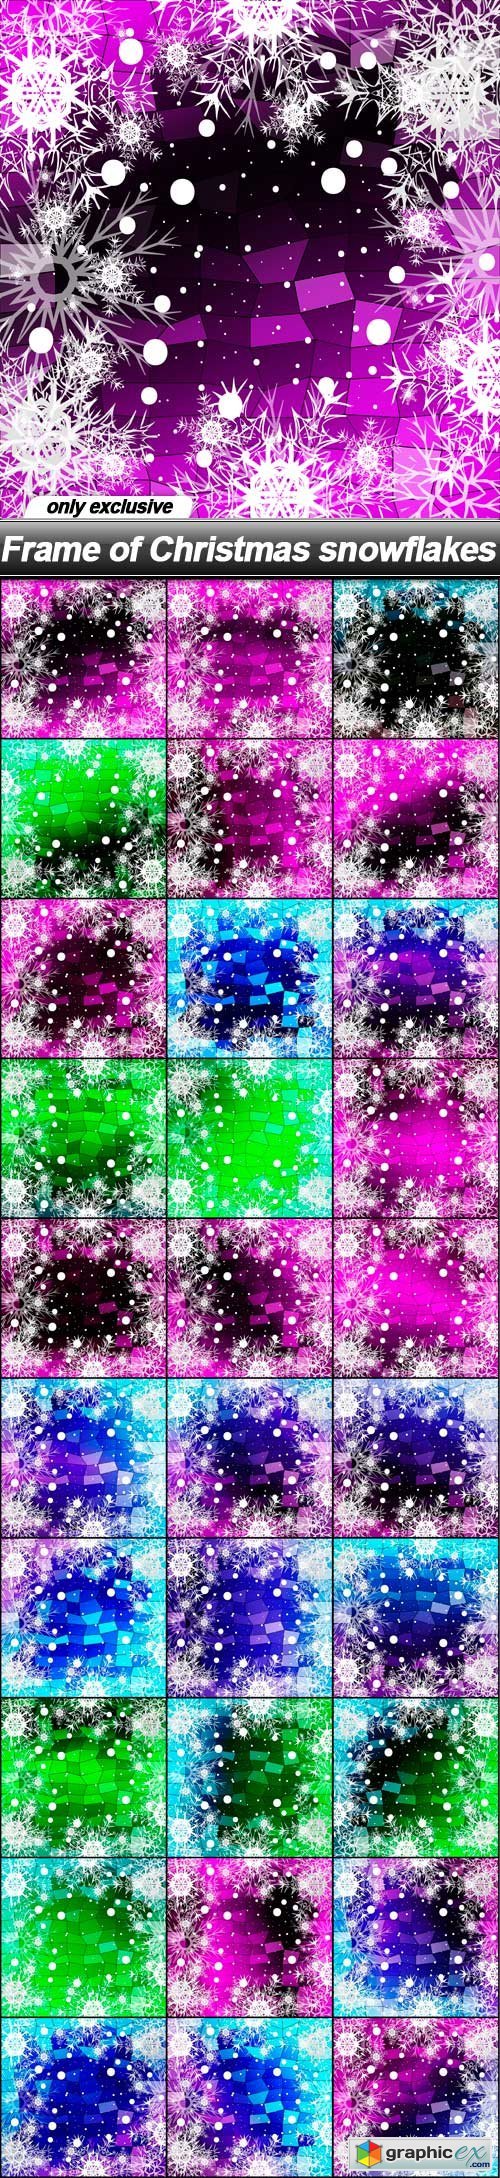 Frame of Christmas snowflakes - 30 EPS